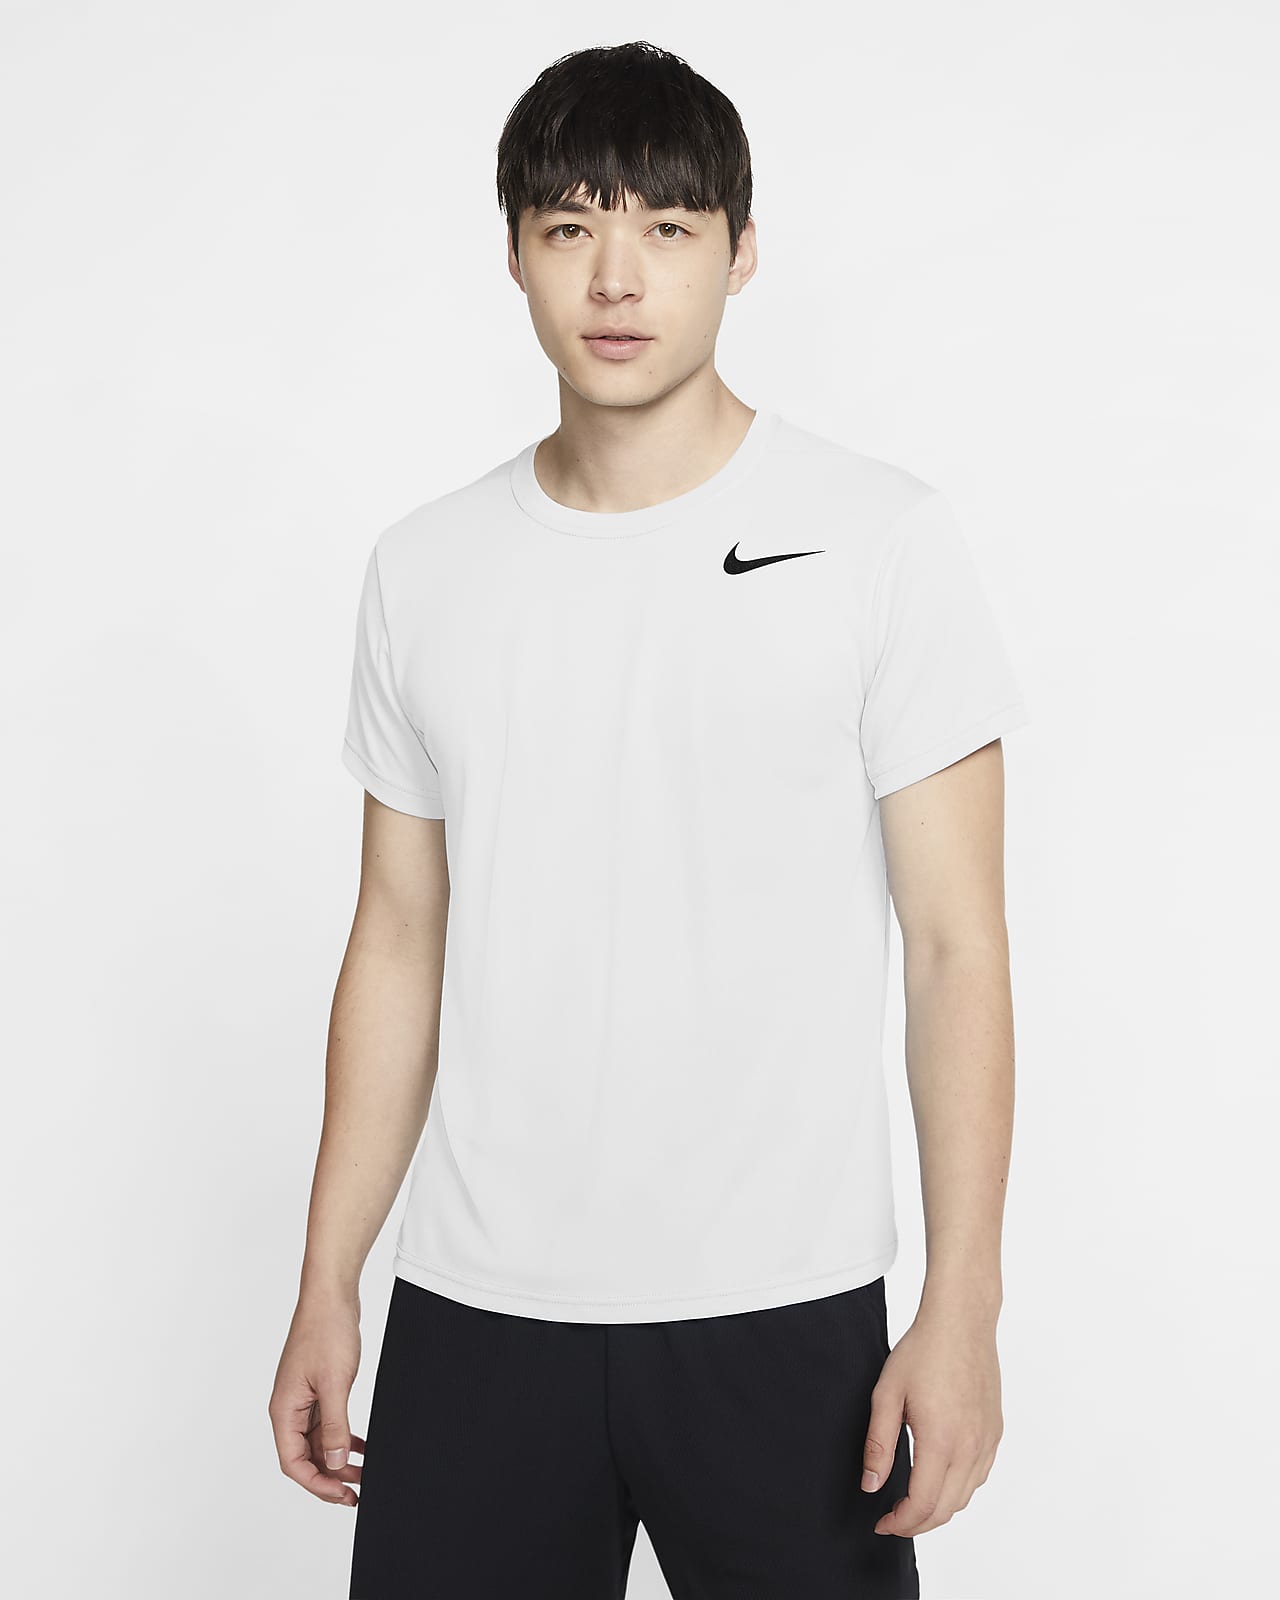 Short-Sleeve Training Top. Nike LU